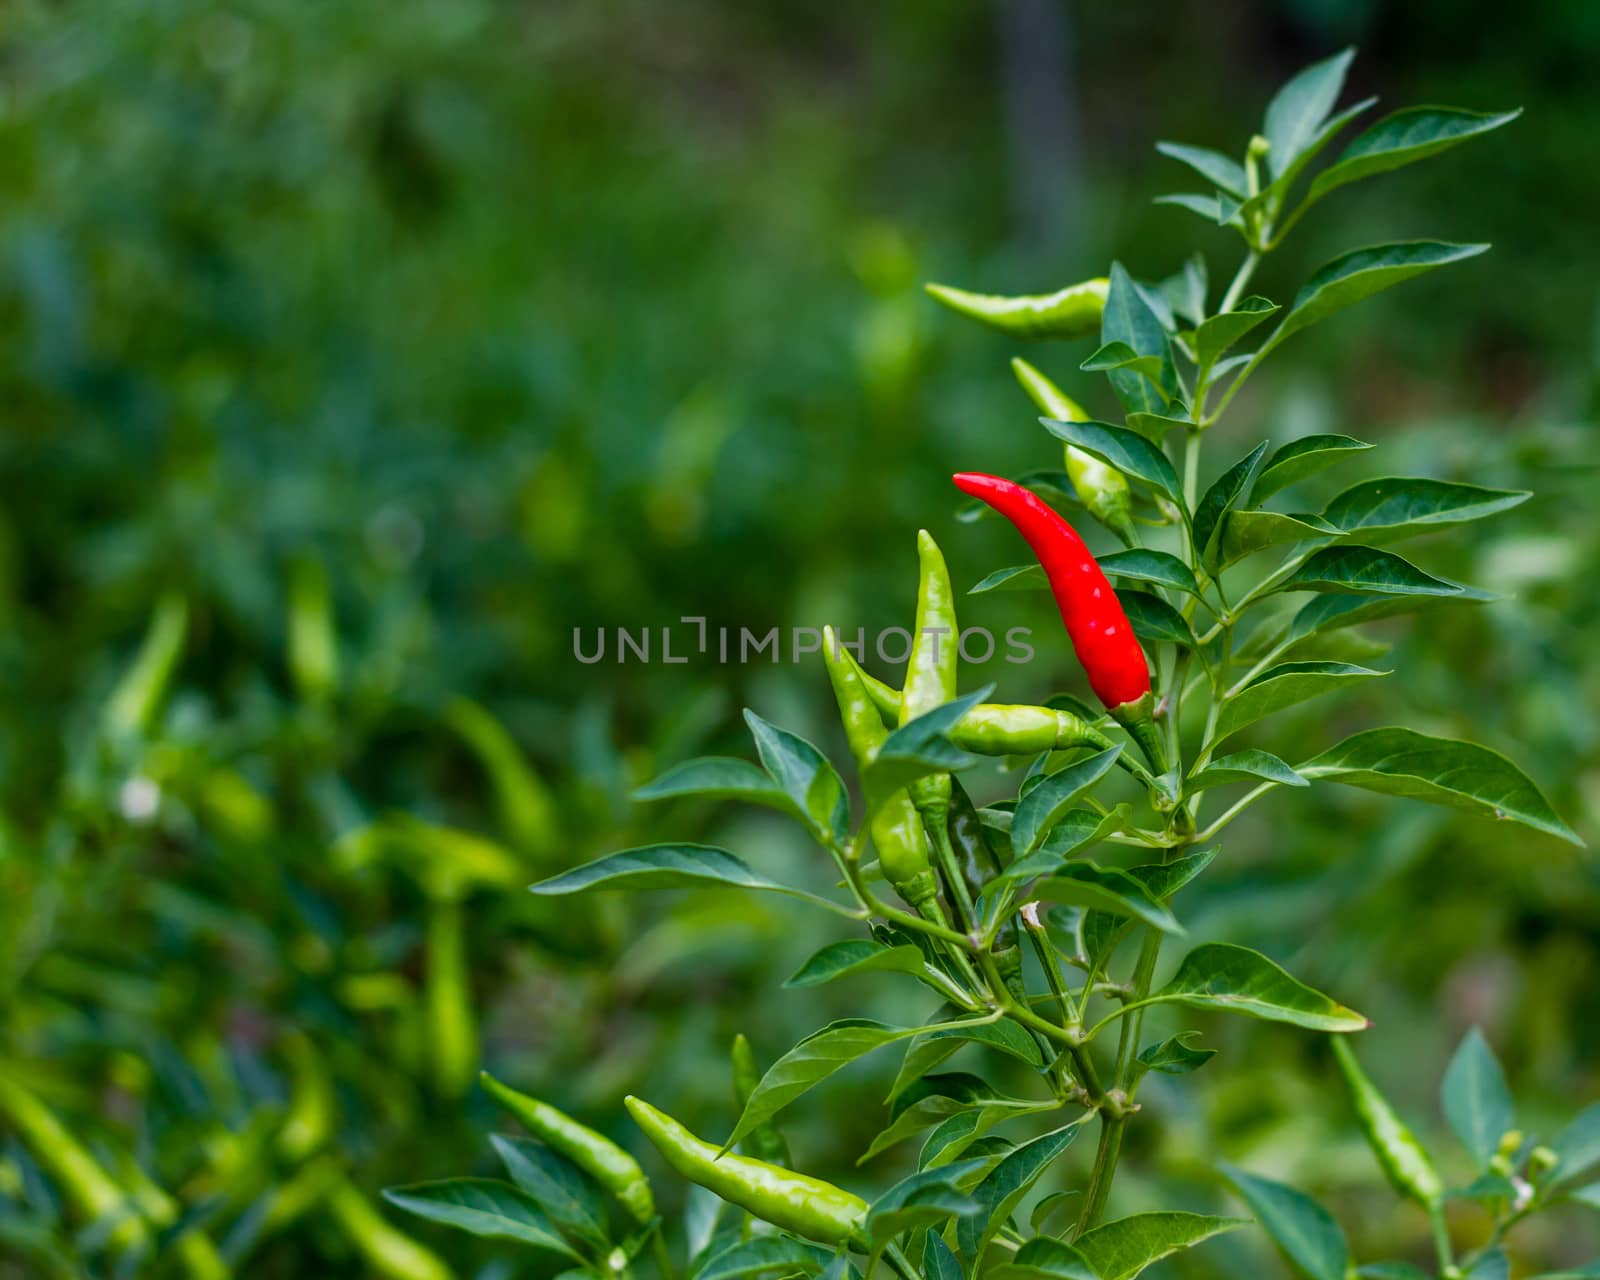 Chili plant by imagesbykenny